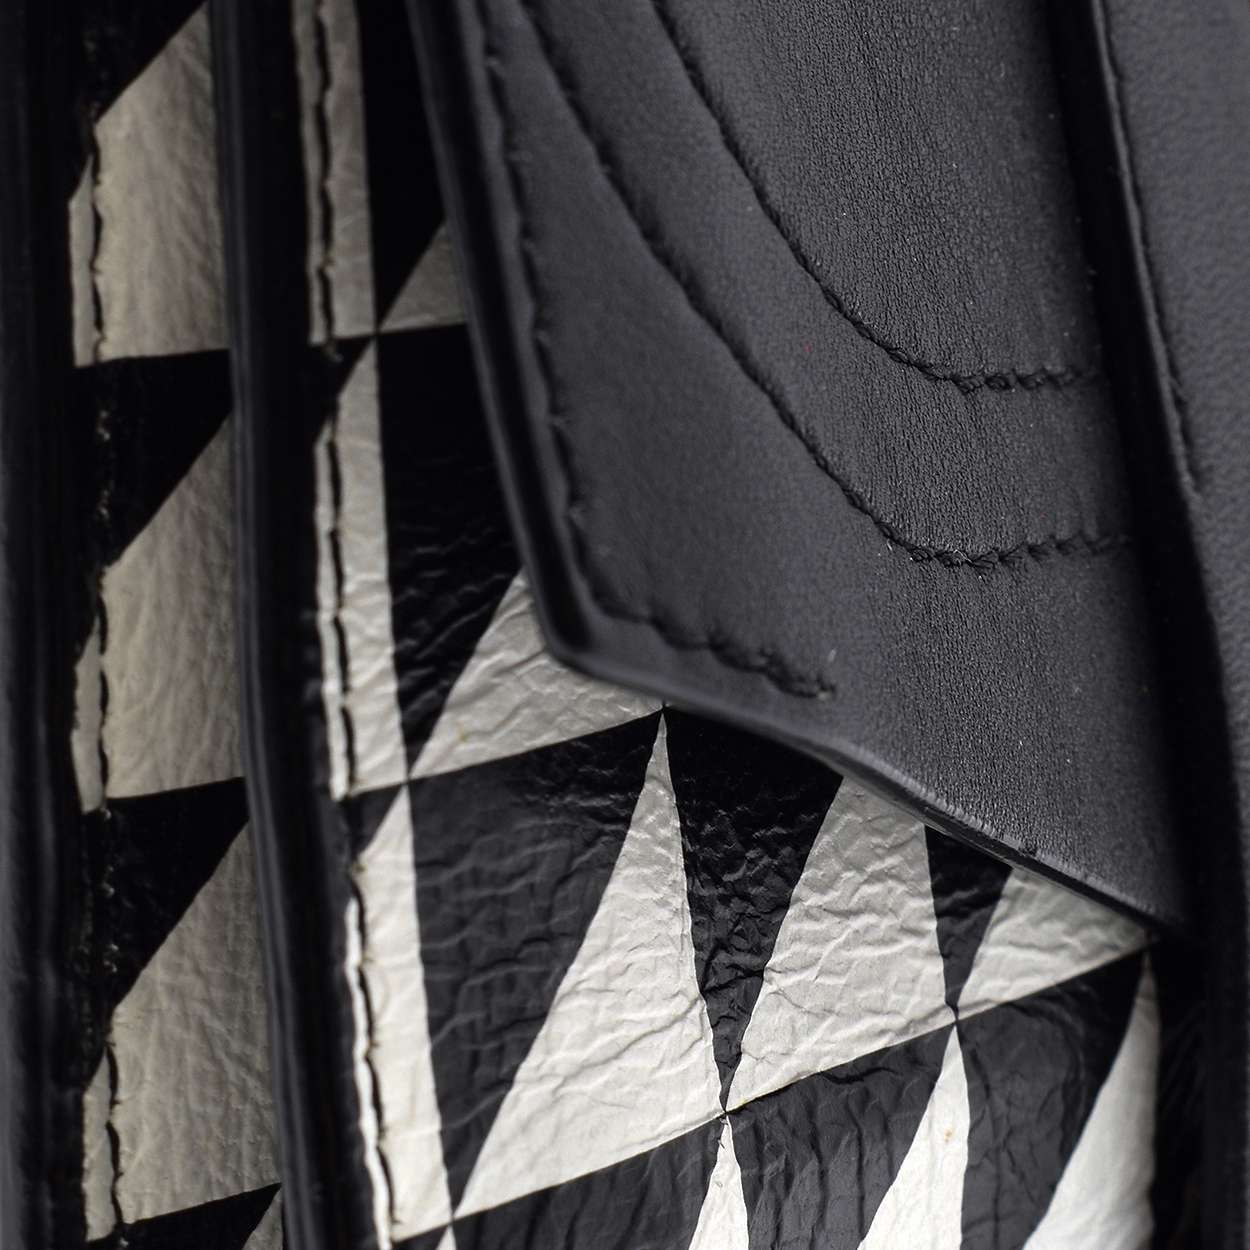 Proenza Schouler - Black & White Leather PS1 Pochette Triangle Print Clutch Bag